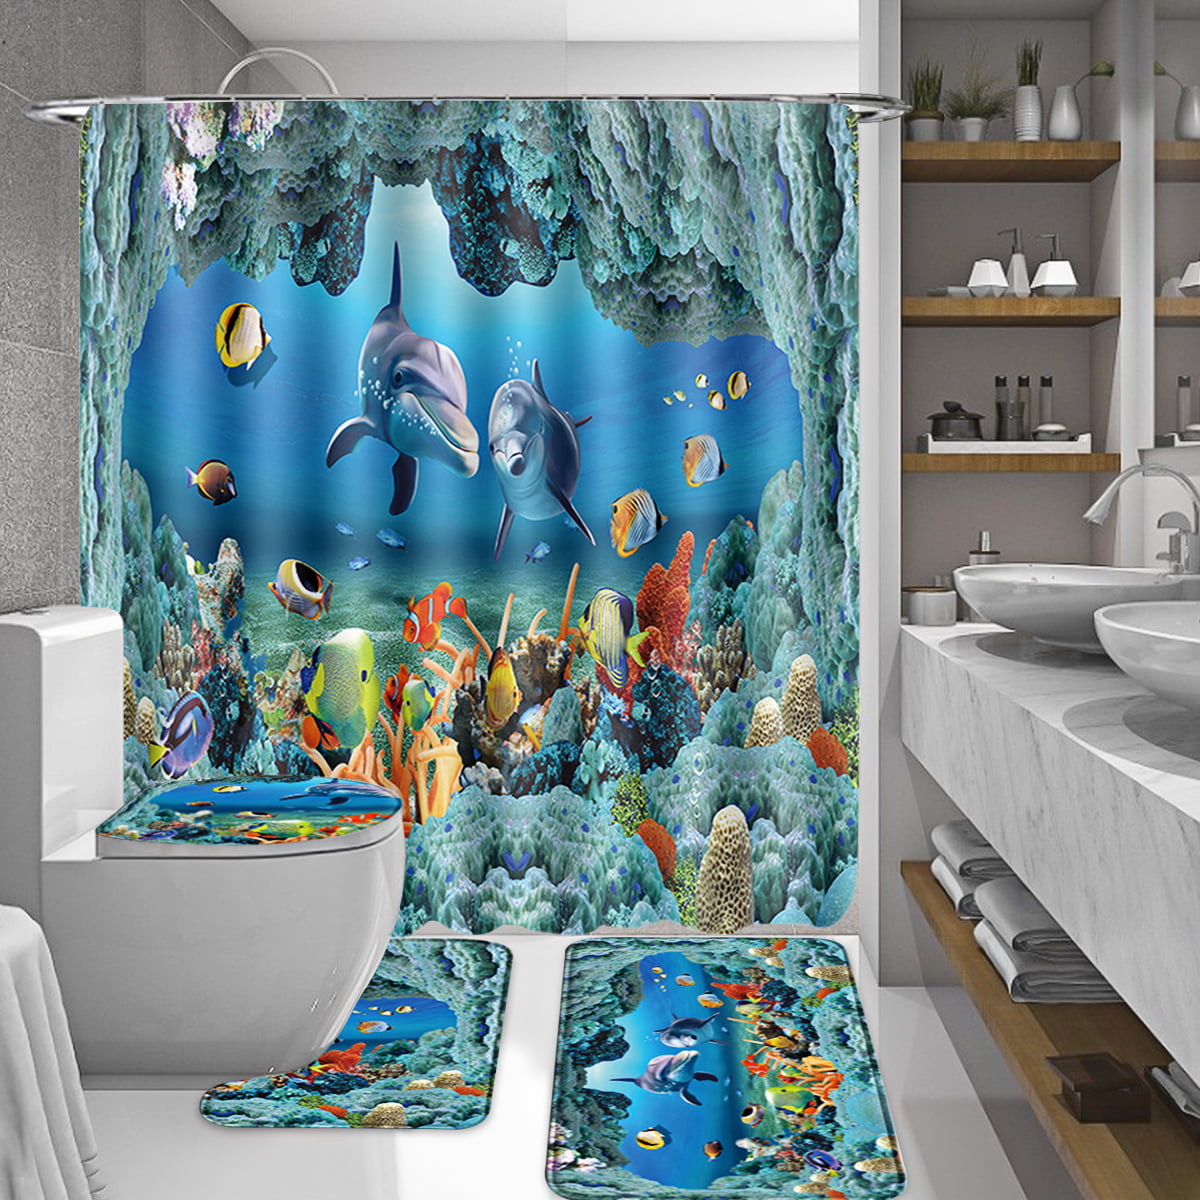 Details about   Miami Dolphins 4PCS Bathroom Rugs Set Shower Curtain Bath Mat Toilet Lid Cover